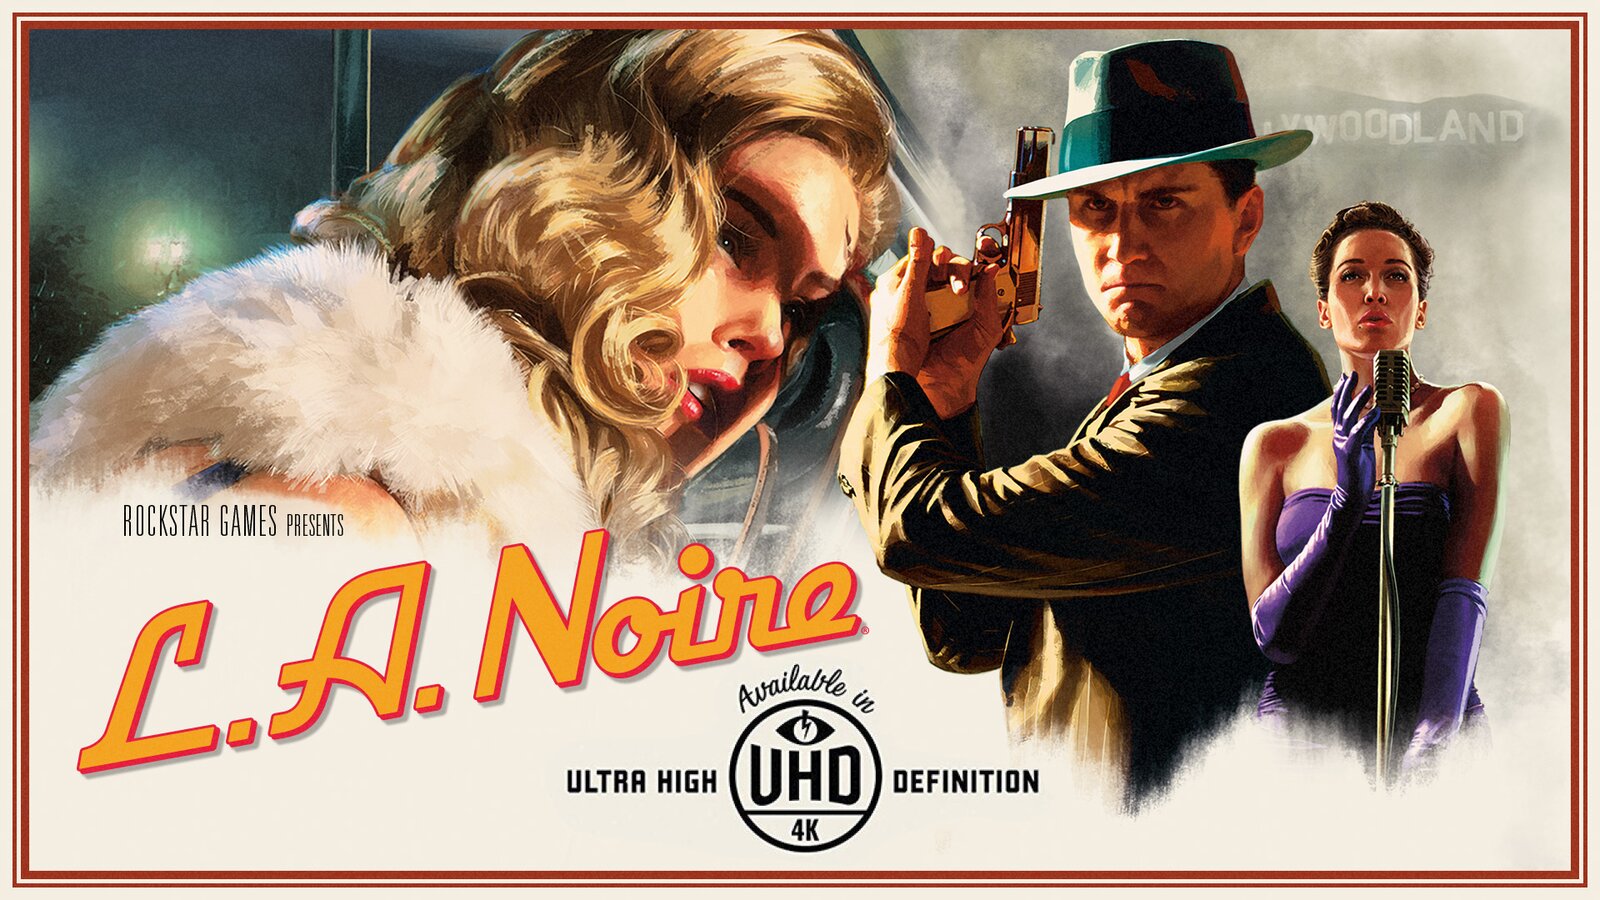 L.A. Noire - Remastered